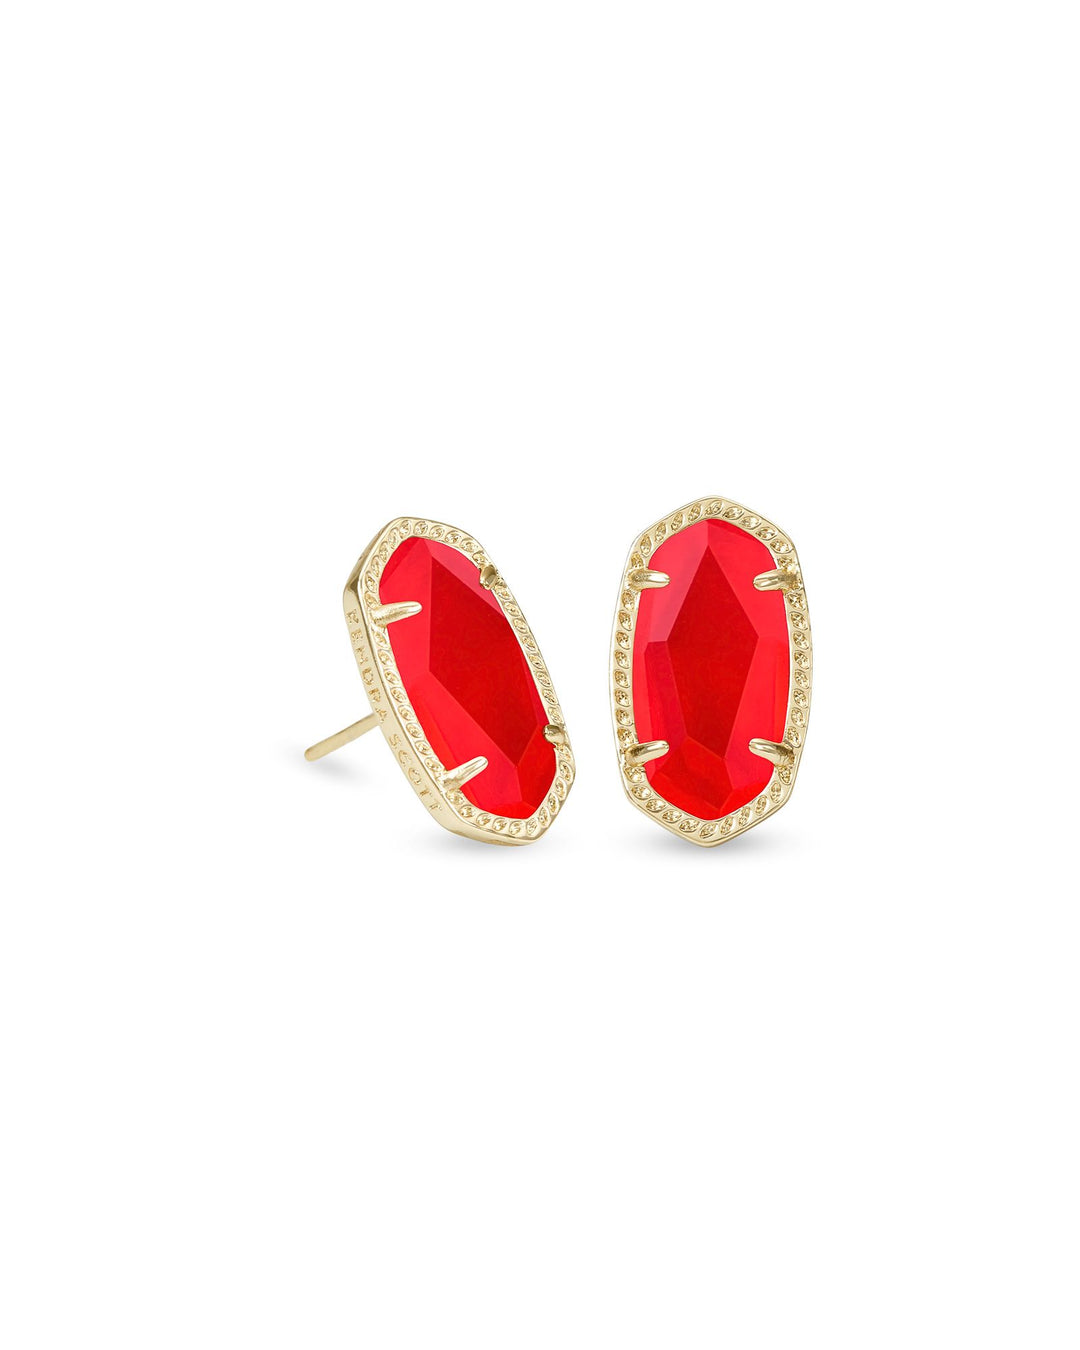 Kendra Scott Ellie Gold Stud Earrings in Red Illusion